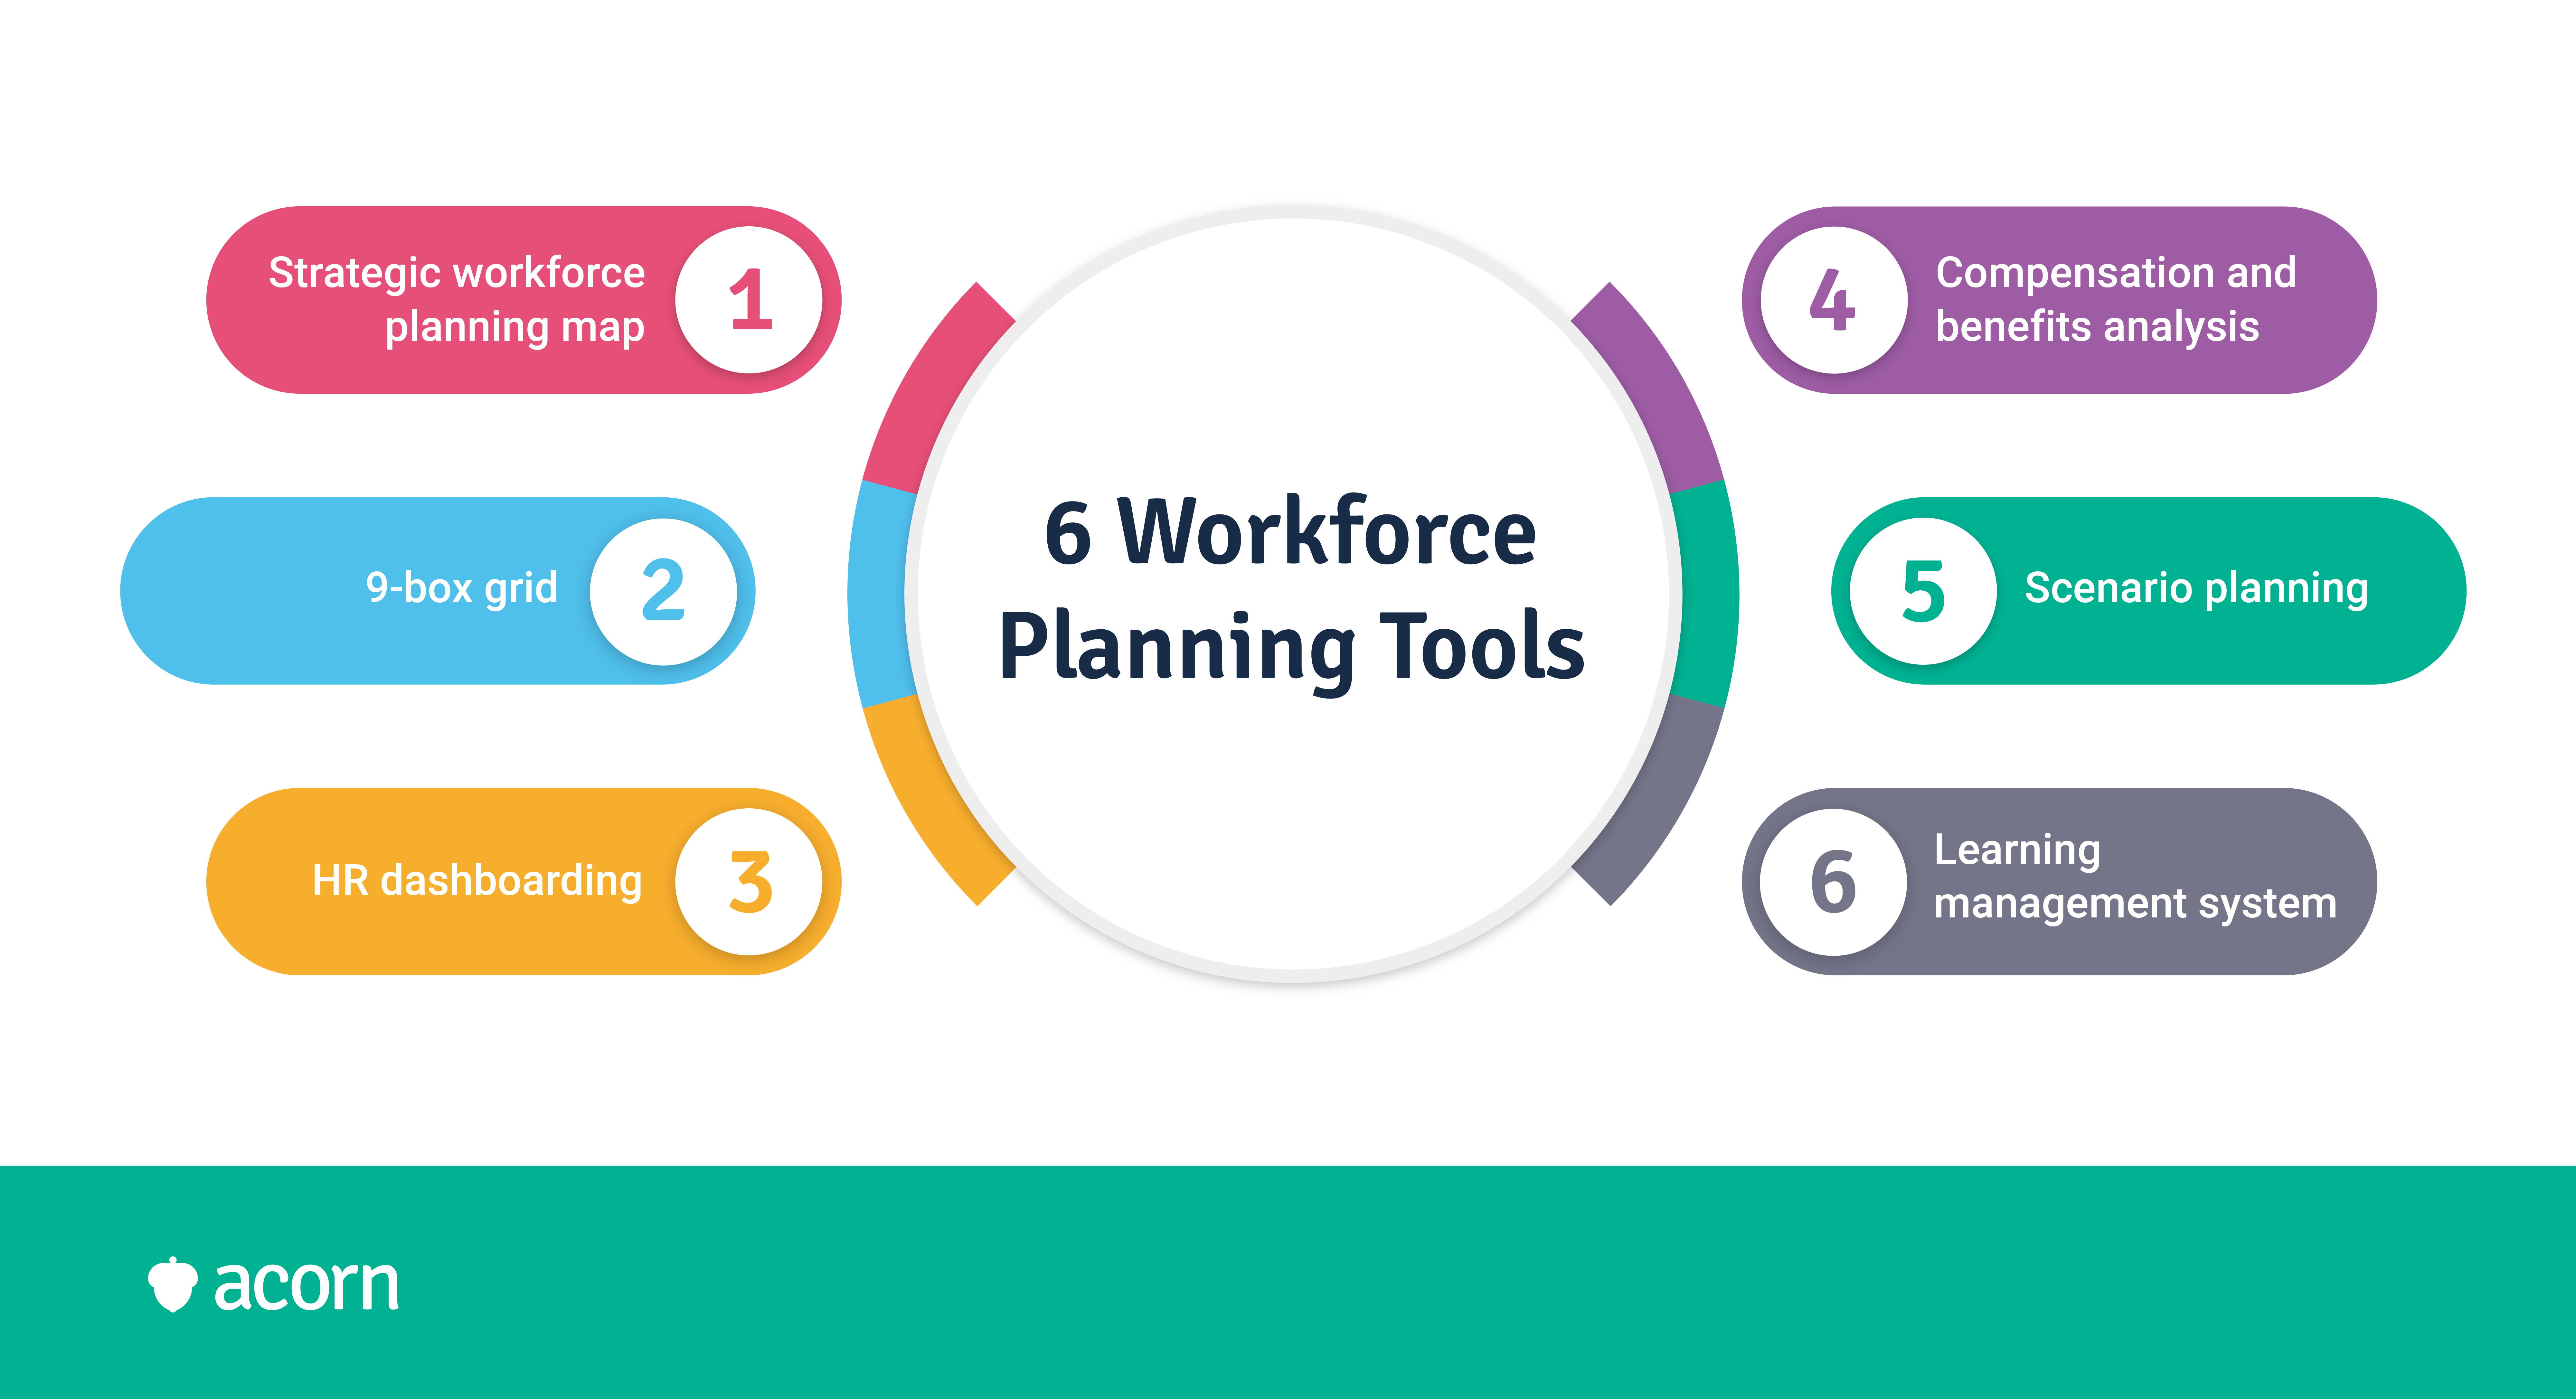 6 common workforce planning tools